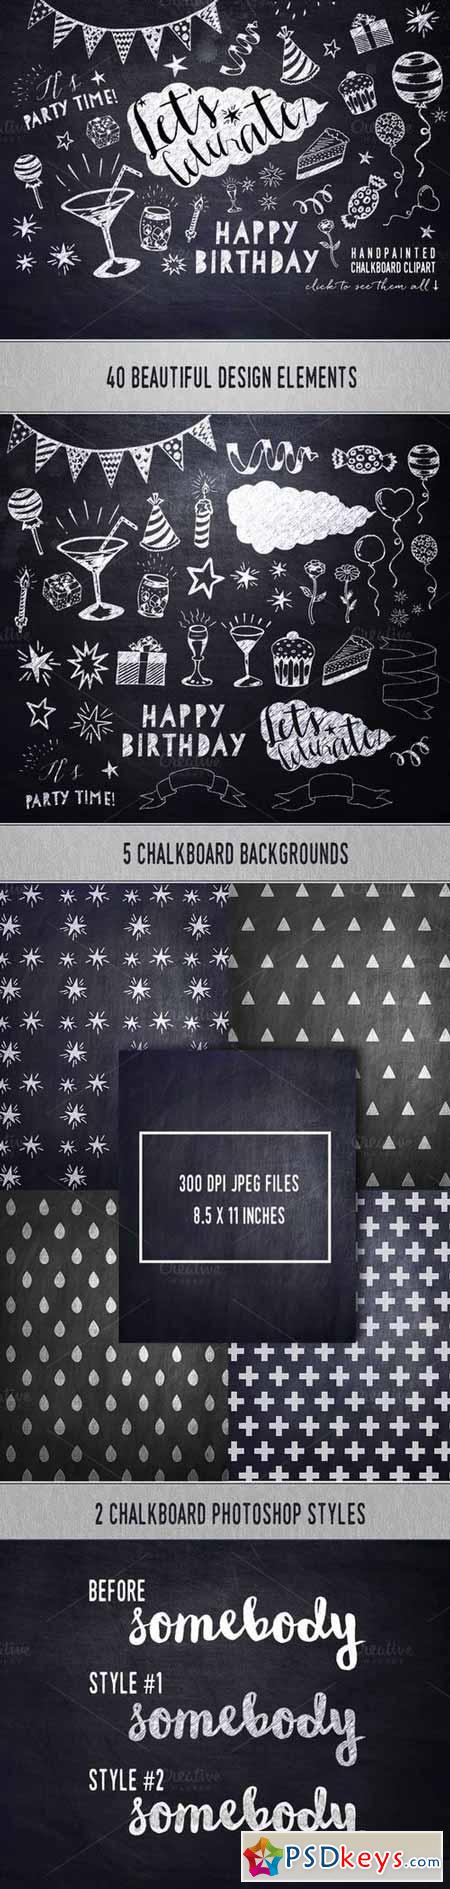 Chalkboard Party Clipart Bundle 417050